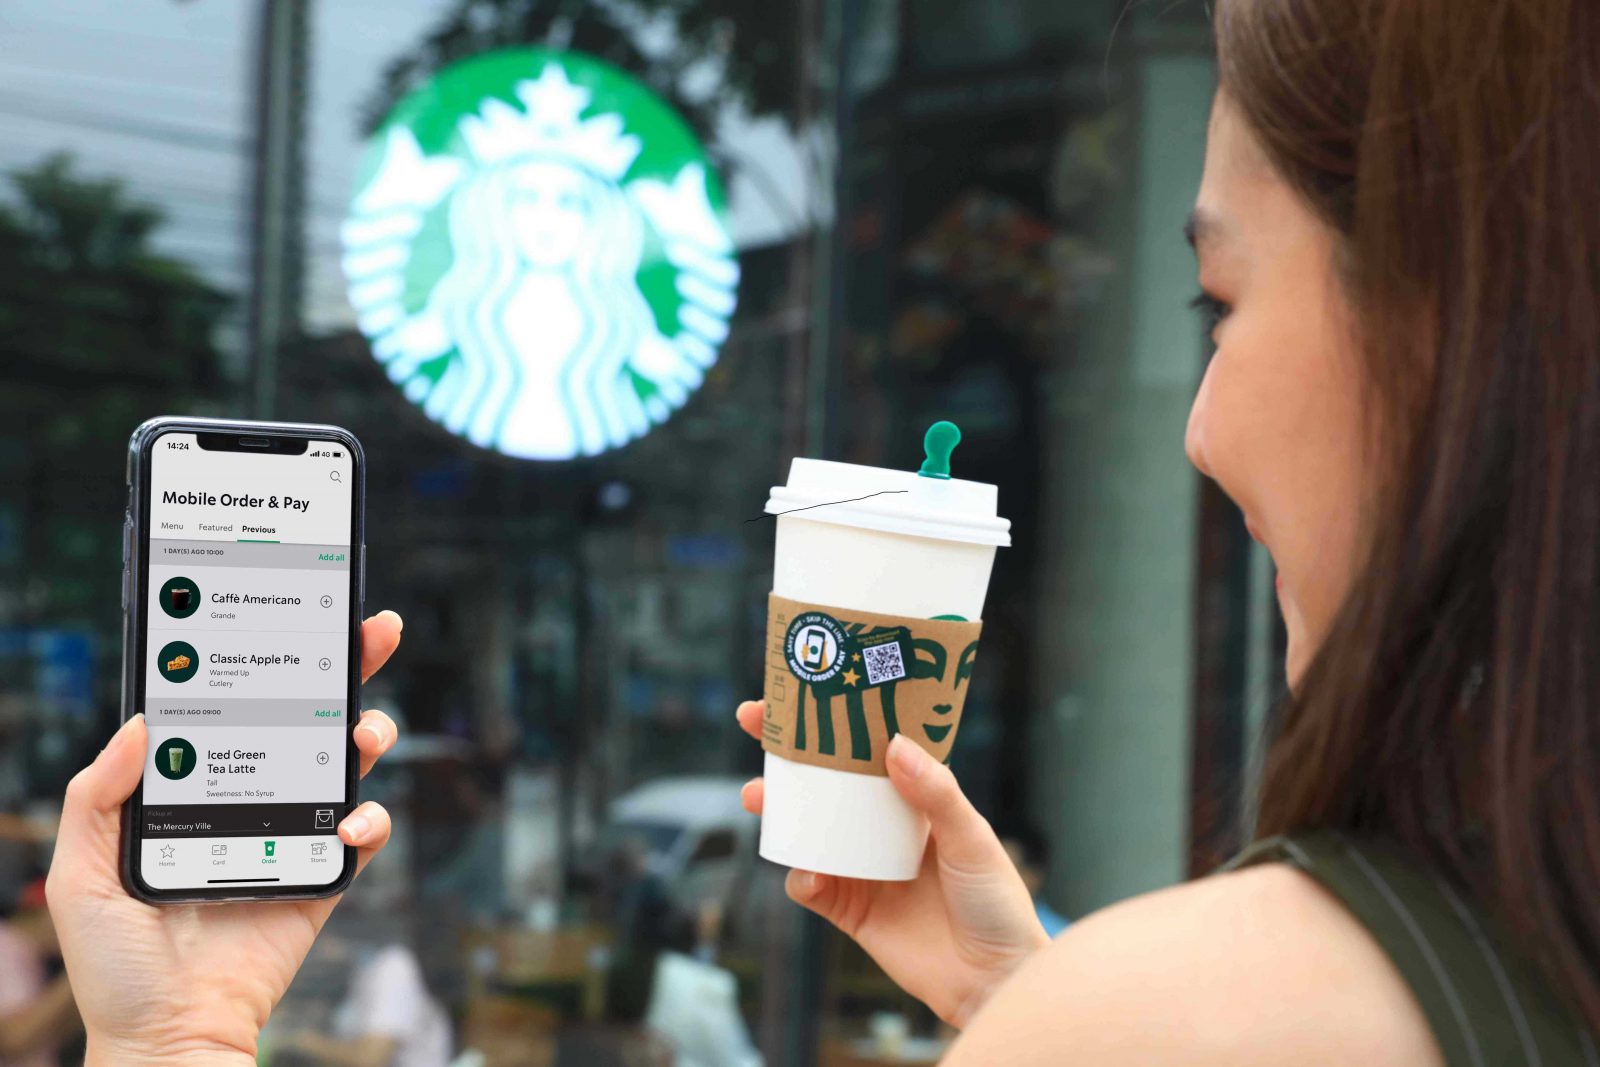 MOP Lifestyle IT 3 | Mobile Order & Pay | ฟีเจอร์ Mobile Order & Pay บนแอปฯ Starbucks ให้ลูกค้าซื้อเครื่องดื่มและขนมผ่านแอปฯ ก่อนถึงร้าน